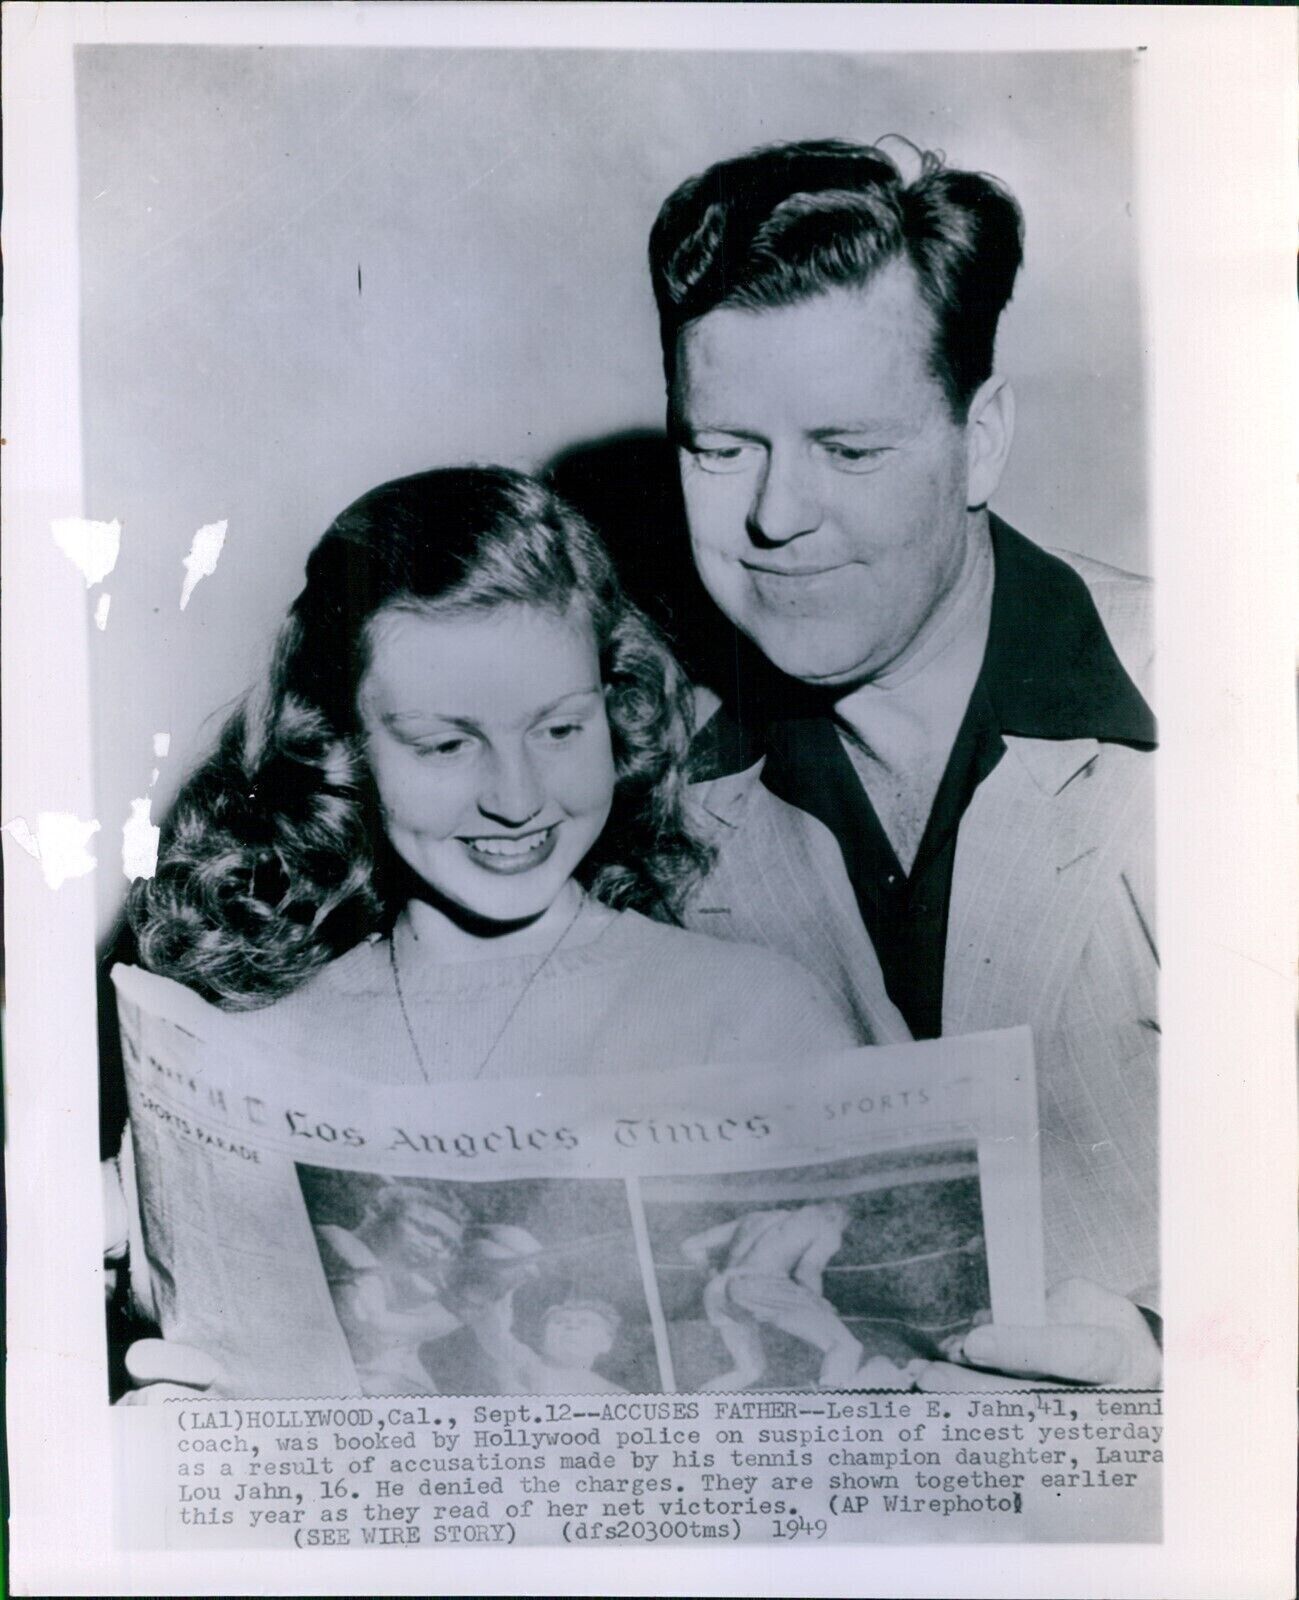 1949 Tennis Coach Leslie Jahn Arrested On Incest Charges Crime 8X10 Press Photo